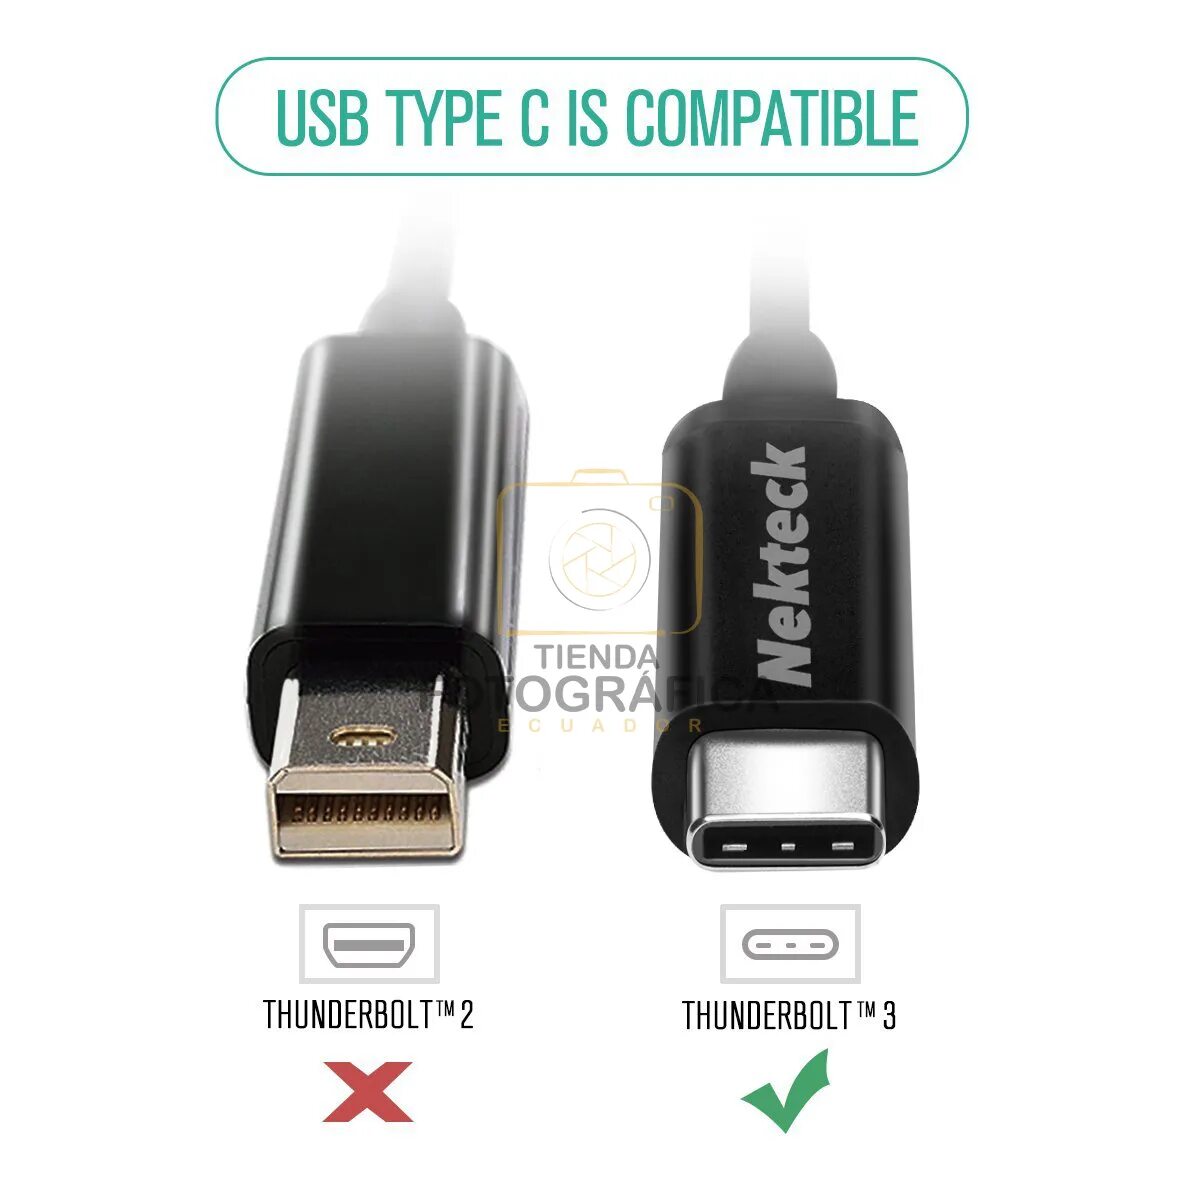 Кабель Thunderbolt 3 USB C. Кабель Thunderbolt 3 (USB-C) to Thunderbolt 2. Переходник Thunderbolt 2 на Type c. USB Type c vs Thunderbolt.